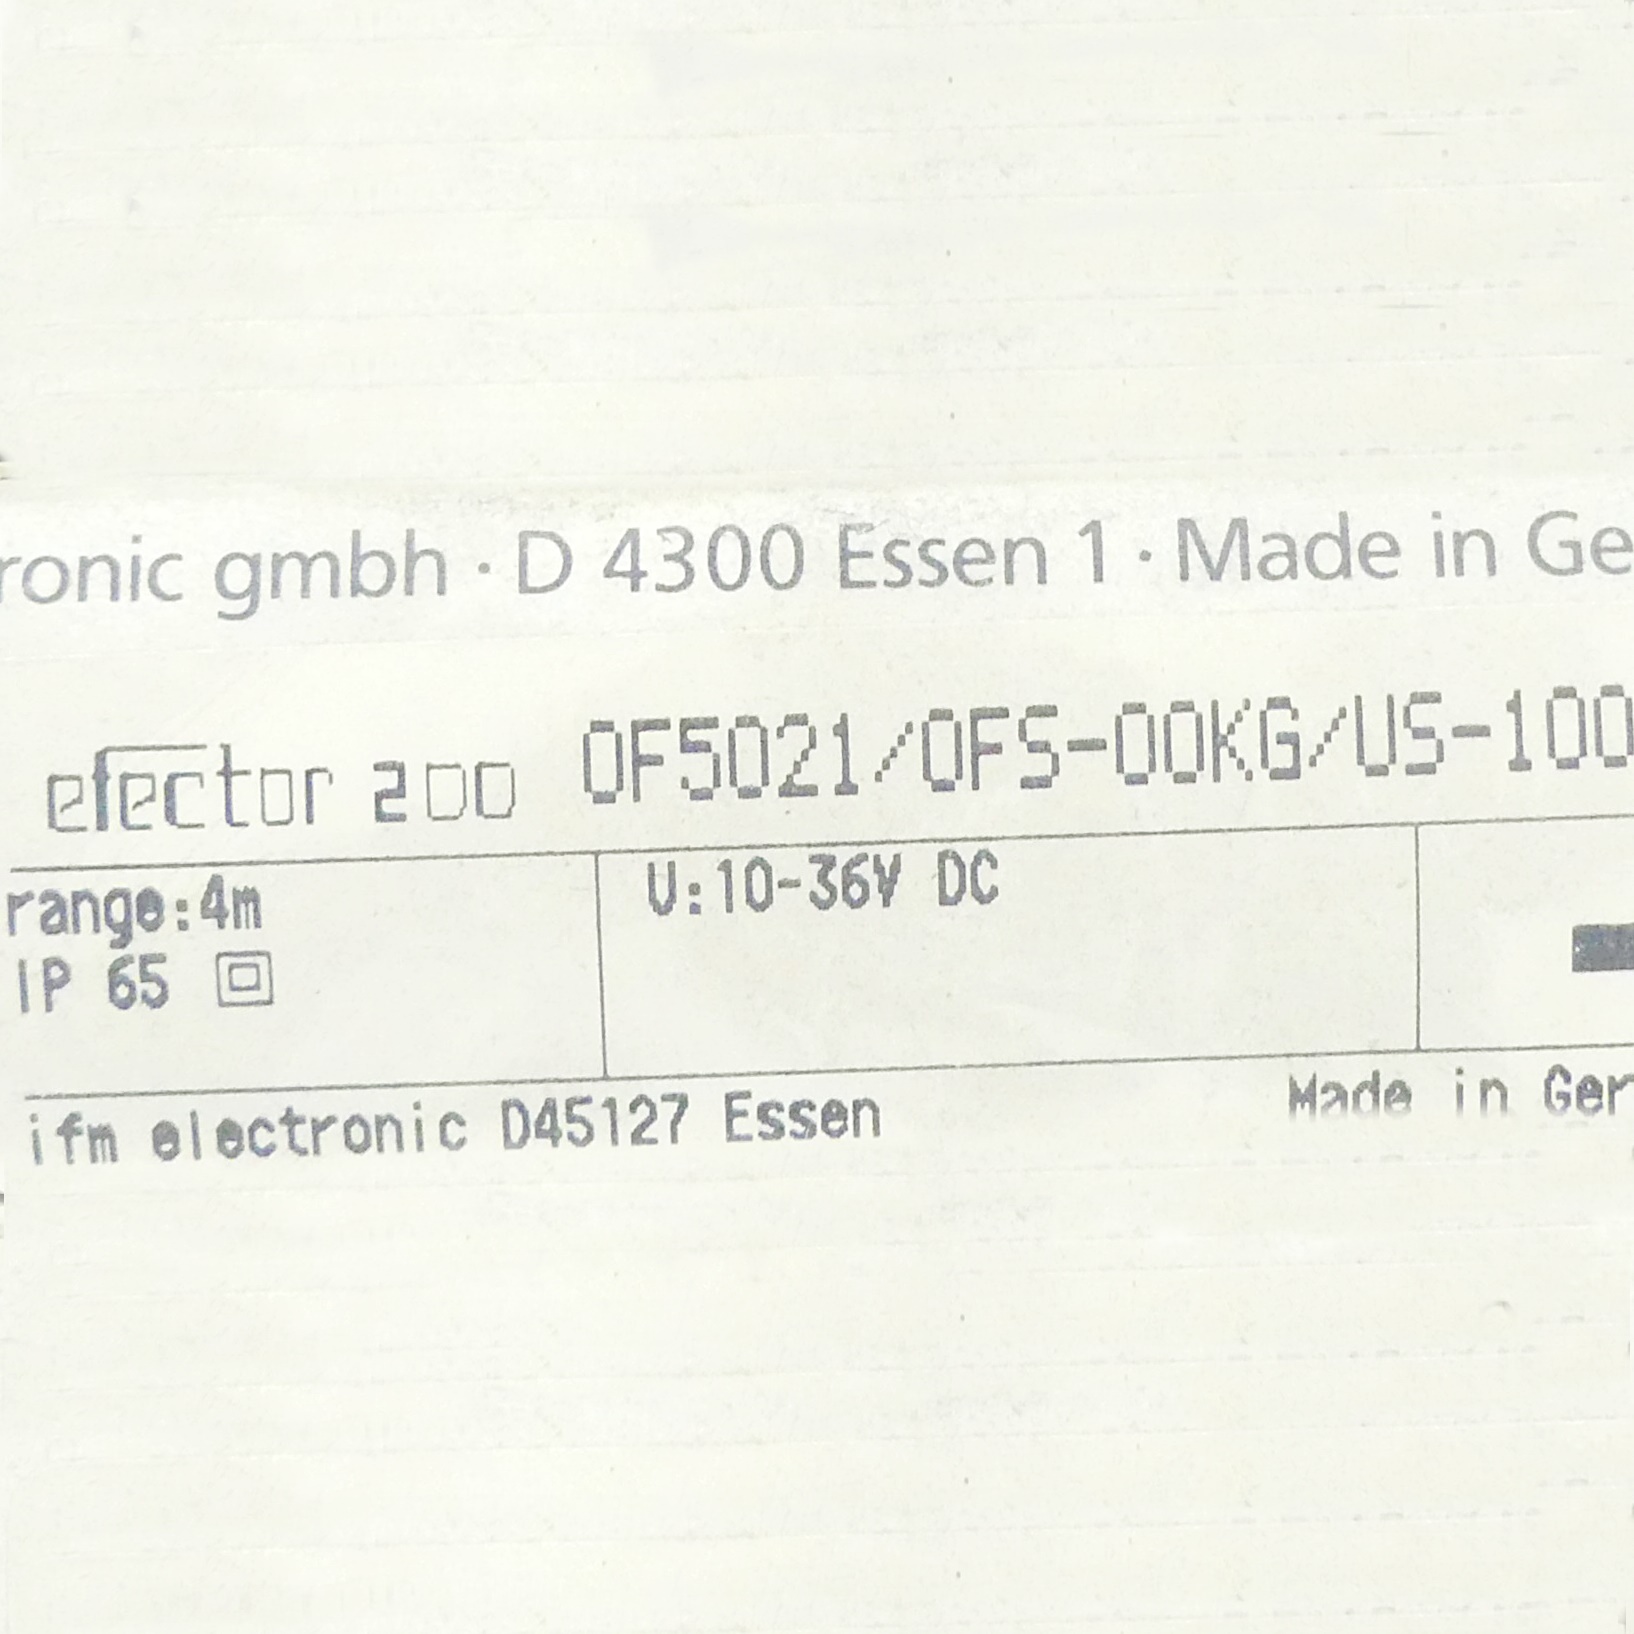 Ultrasonic 0F5021/0FS-00KG/US-100 